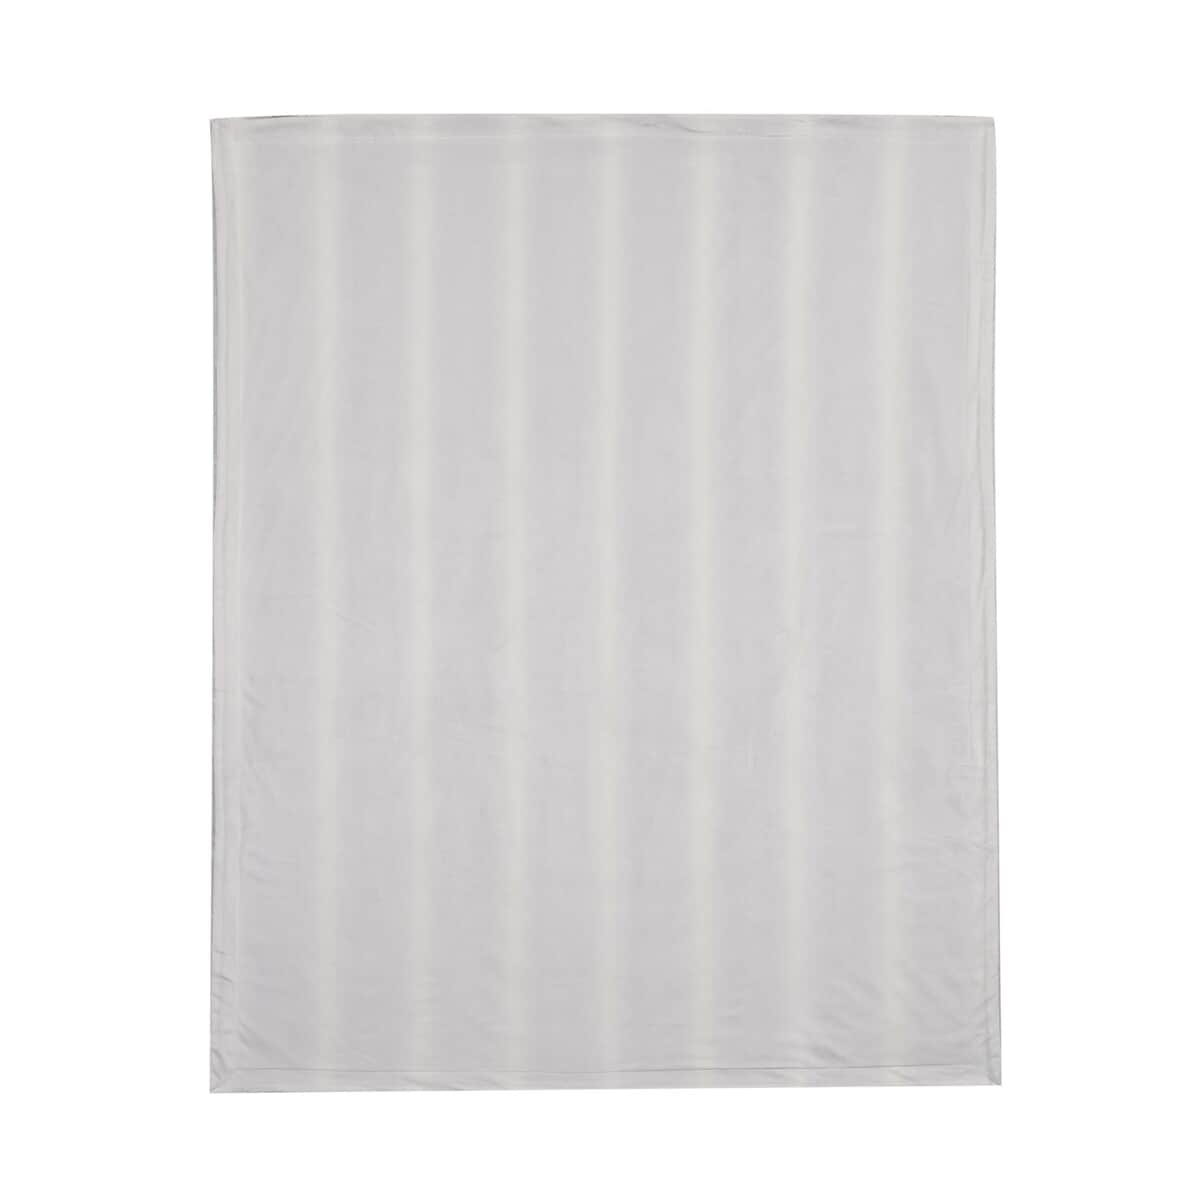 HOMESMART Beige Stripe Pattern Microfiber, Rabbit Fur Layer Reversible Blanket (59"x78") image number 2